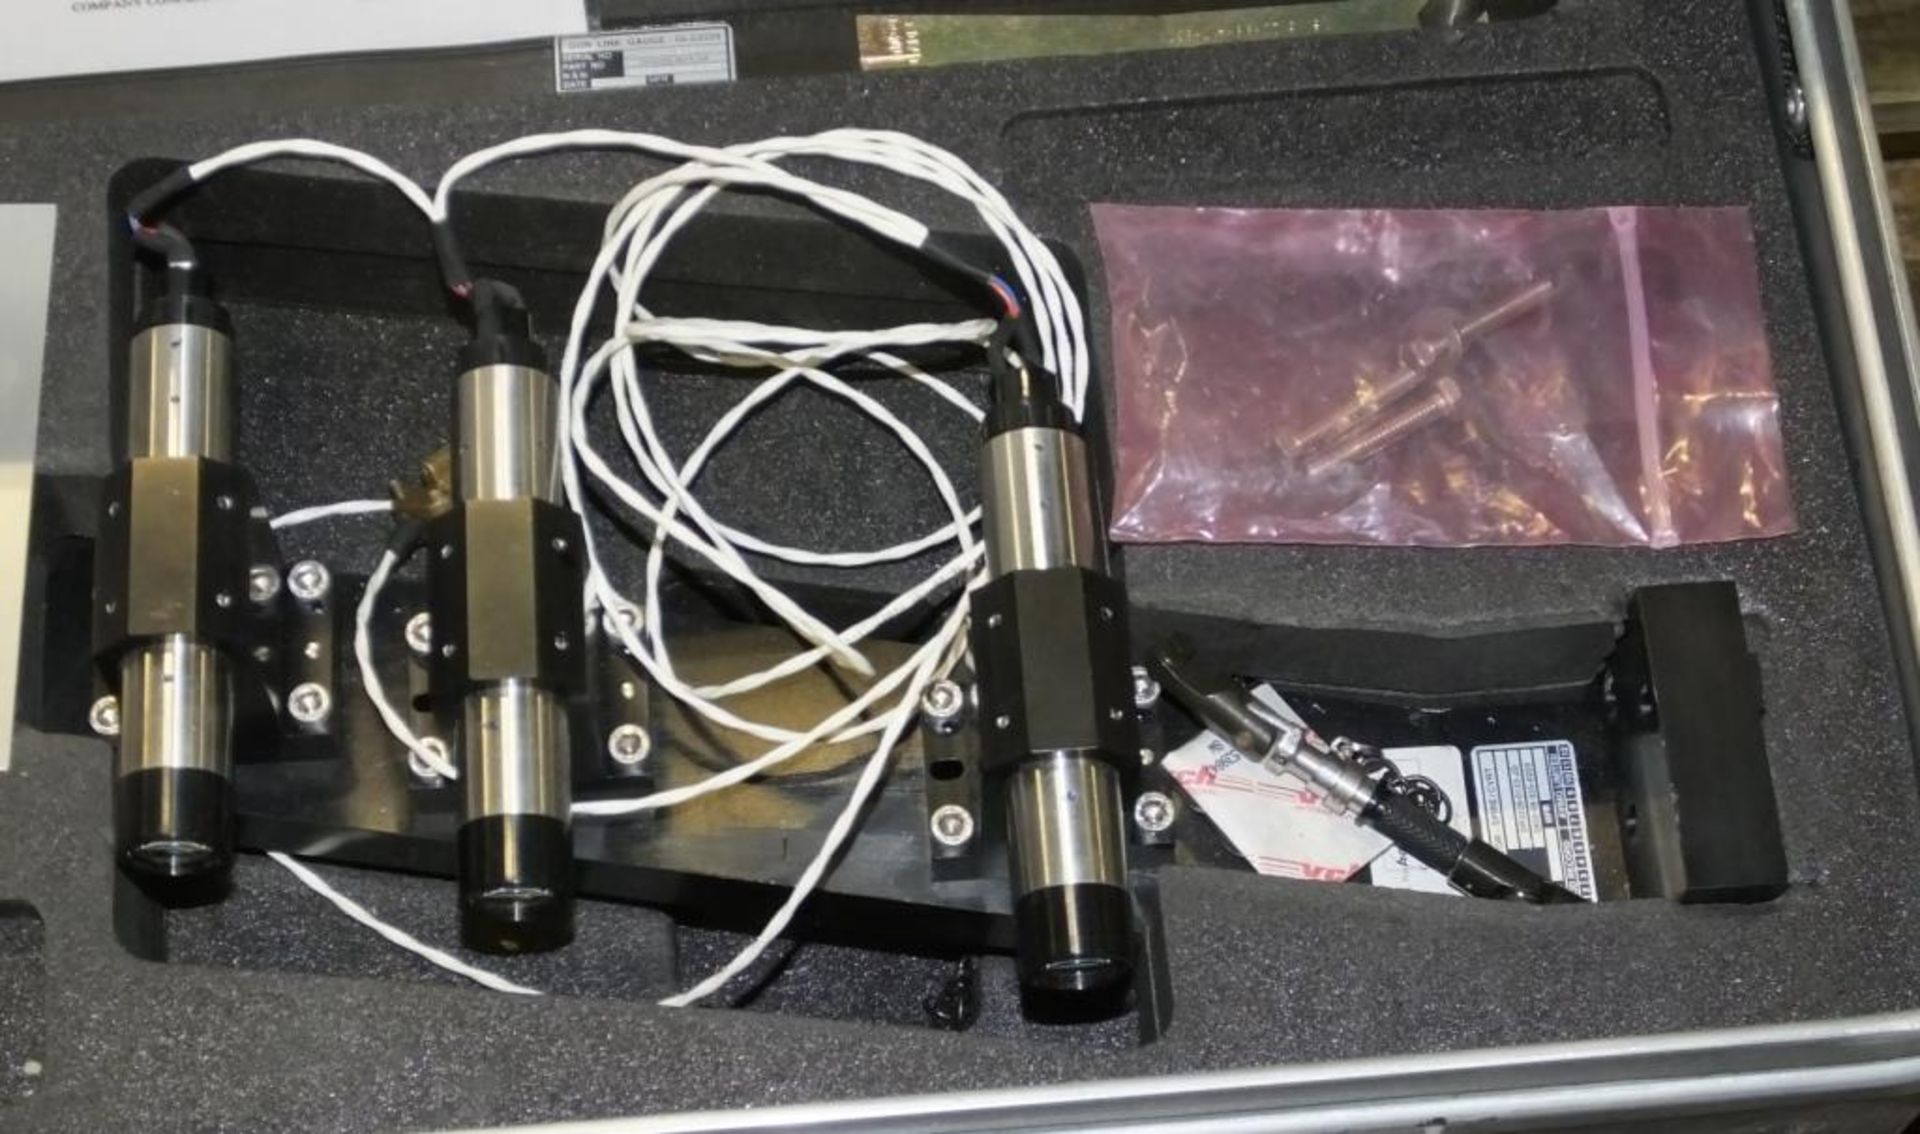 Spire Laser Test Set NSN 5855-99-748-0496, Colimator Assembly Kit in transit cases - Image 7 of 8